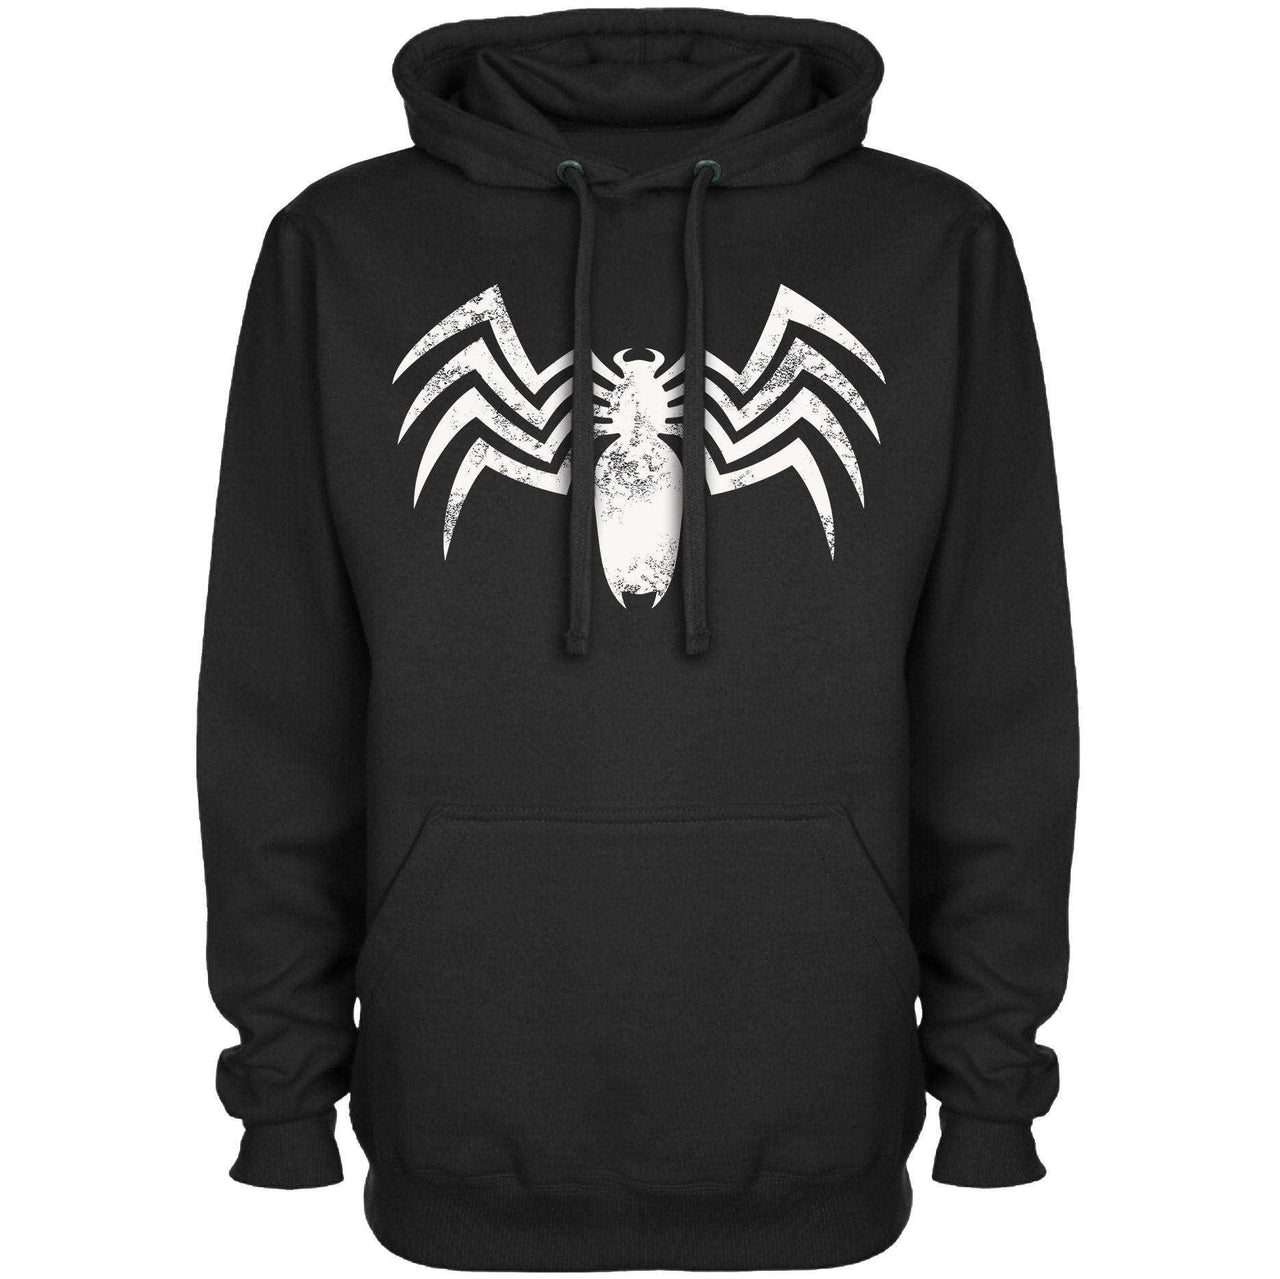 Superhero Venomous Spider Hoodie For Men and Women 8Ball